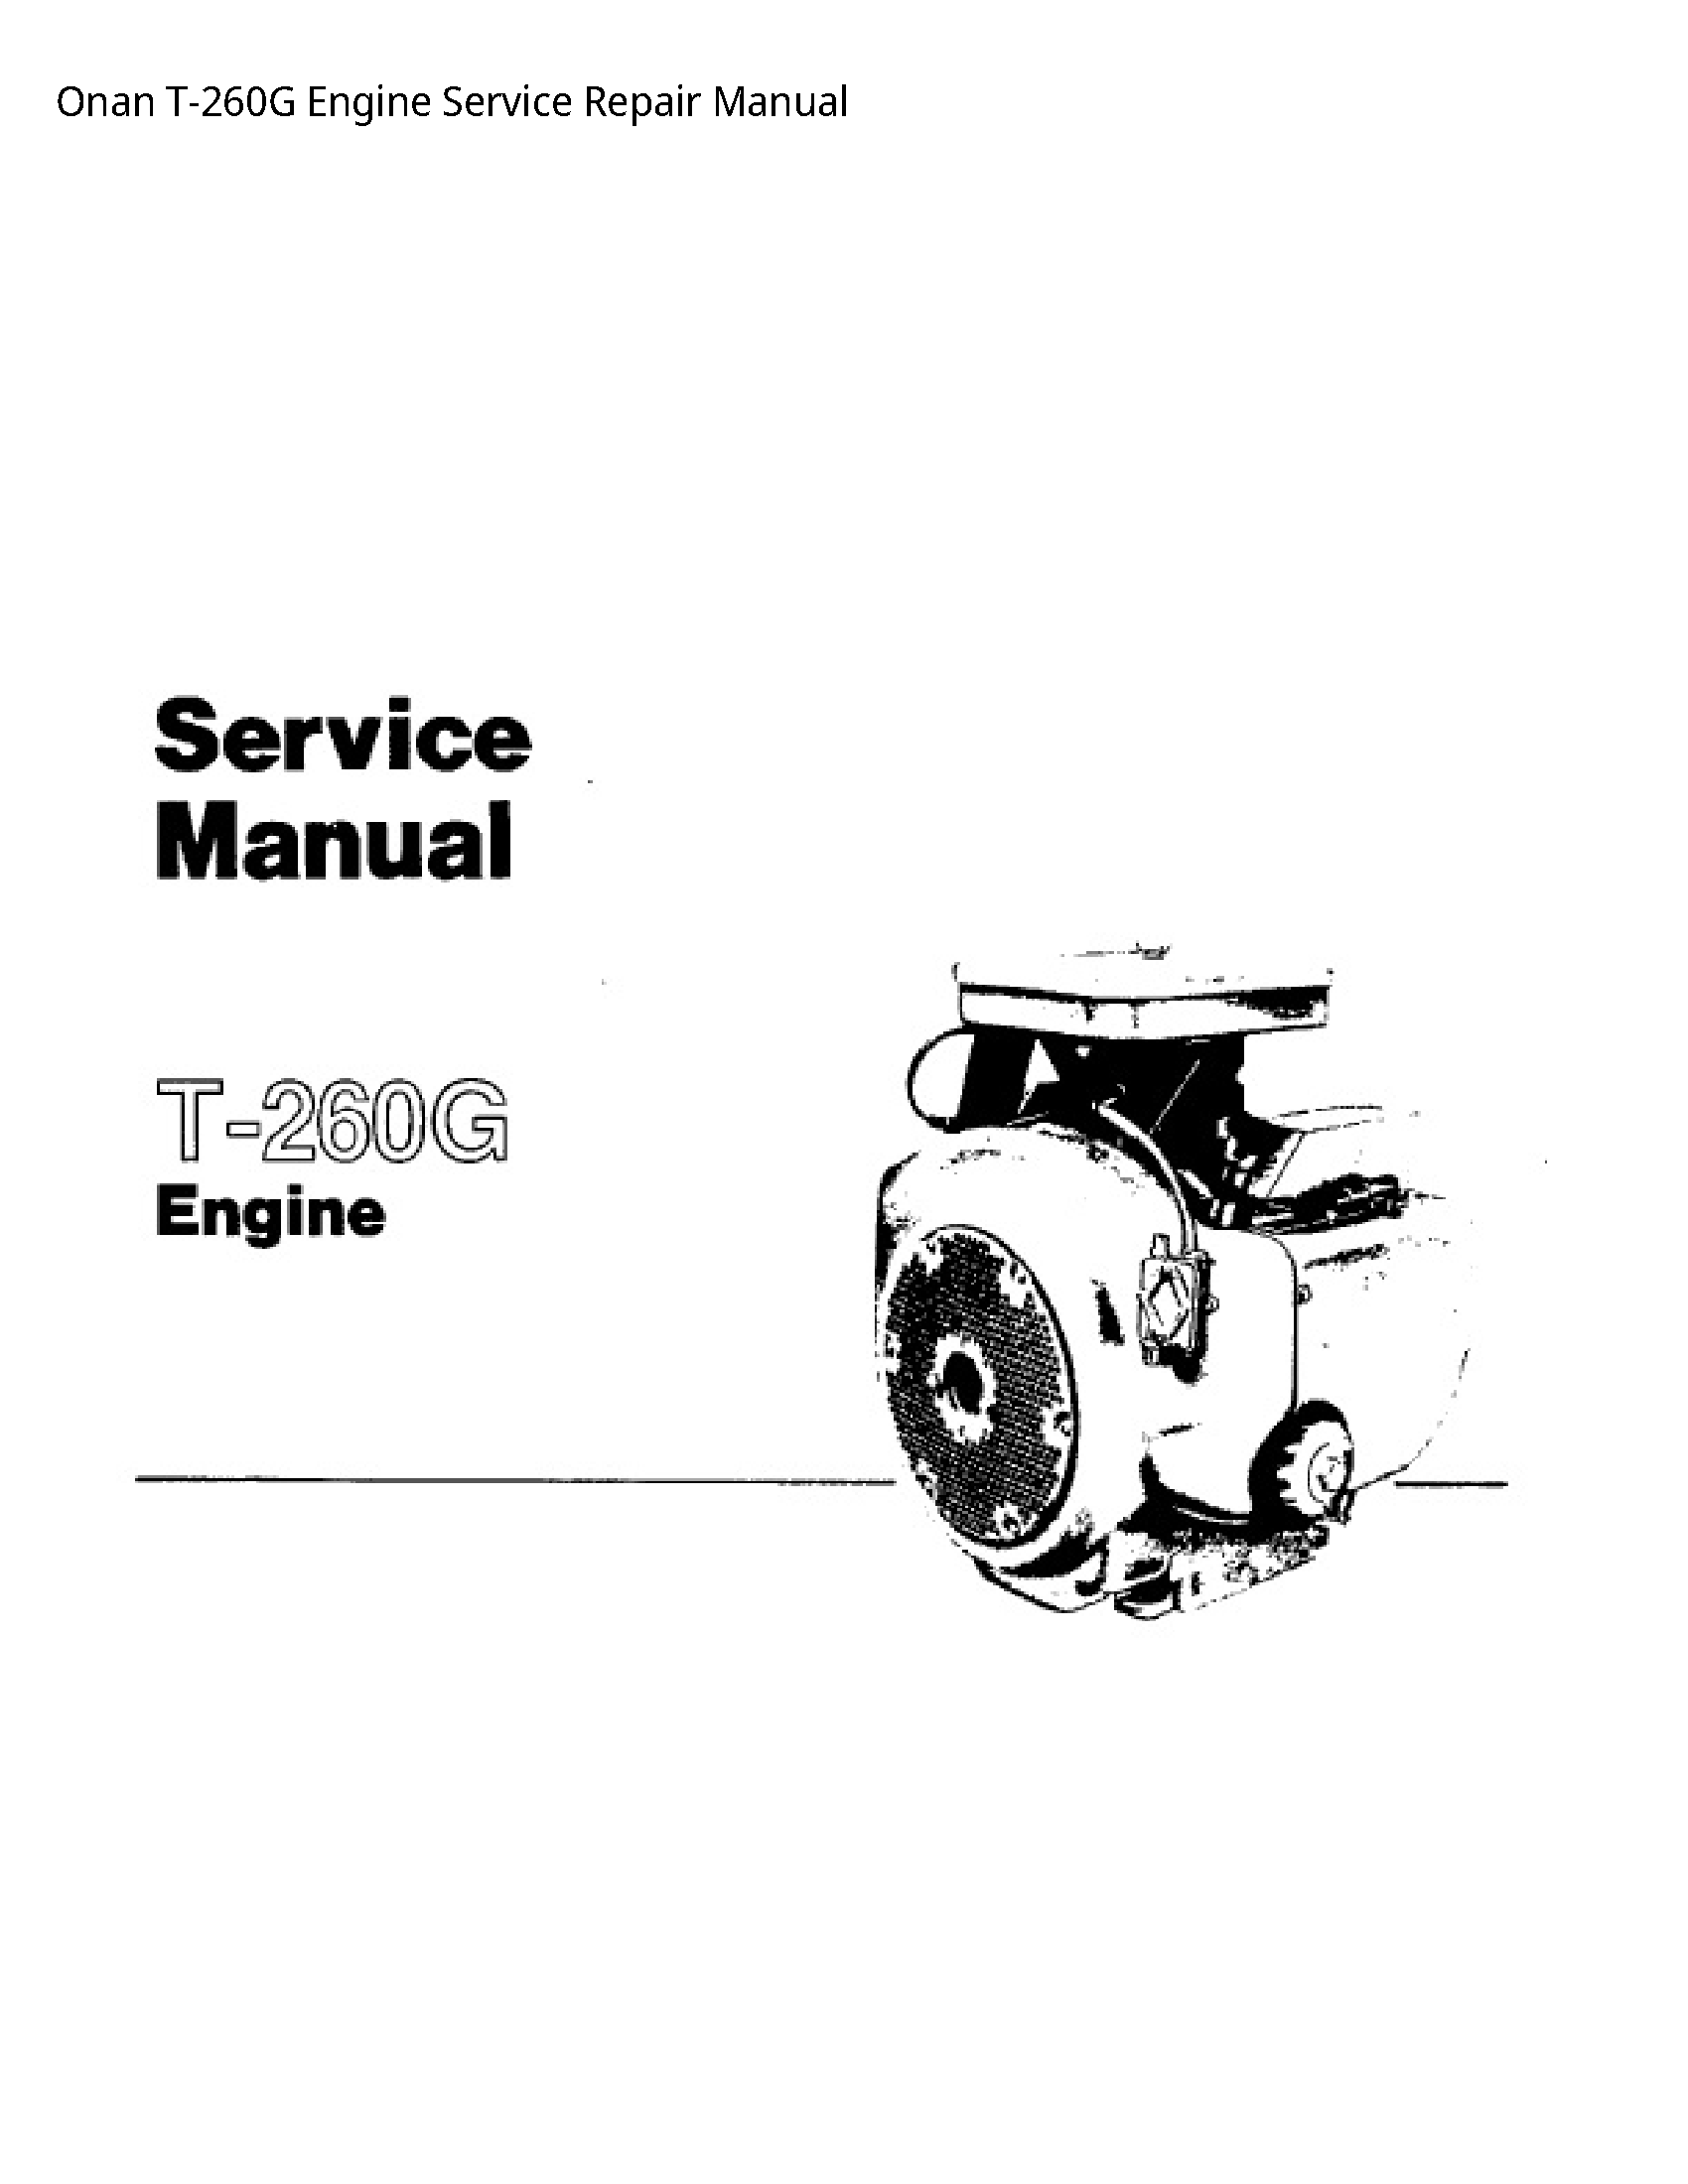 Onan T-260G Engine manual